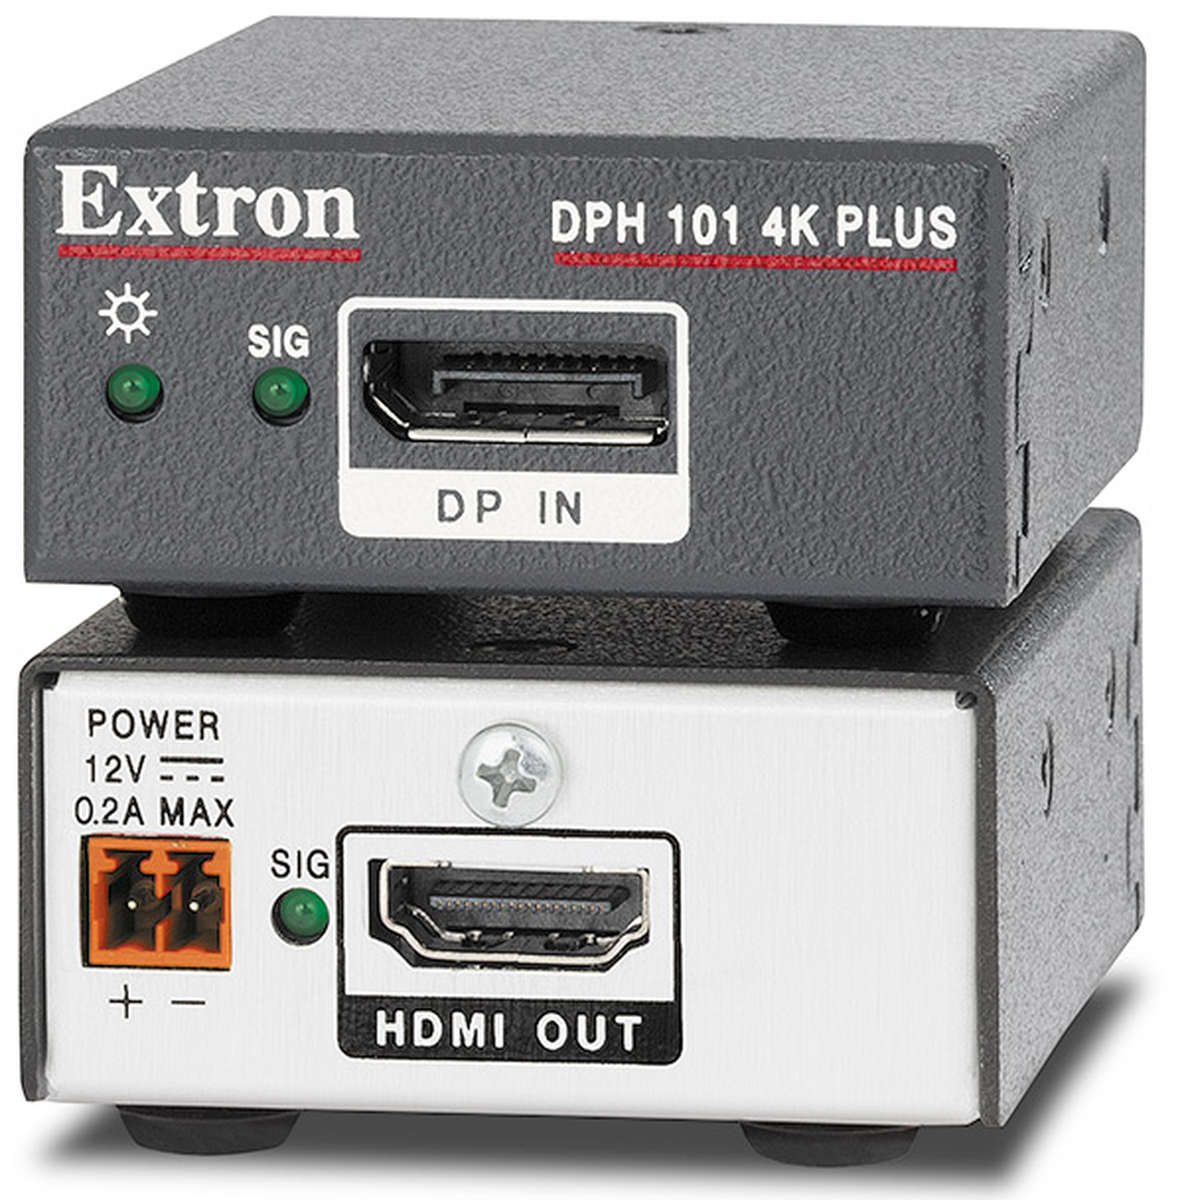 Extron DPH 101 4K PLUS 60-1686-01  product image